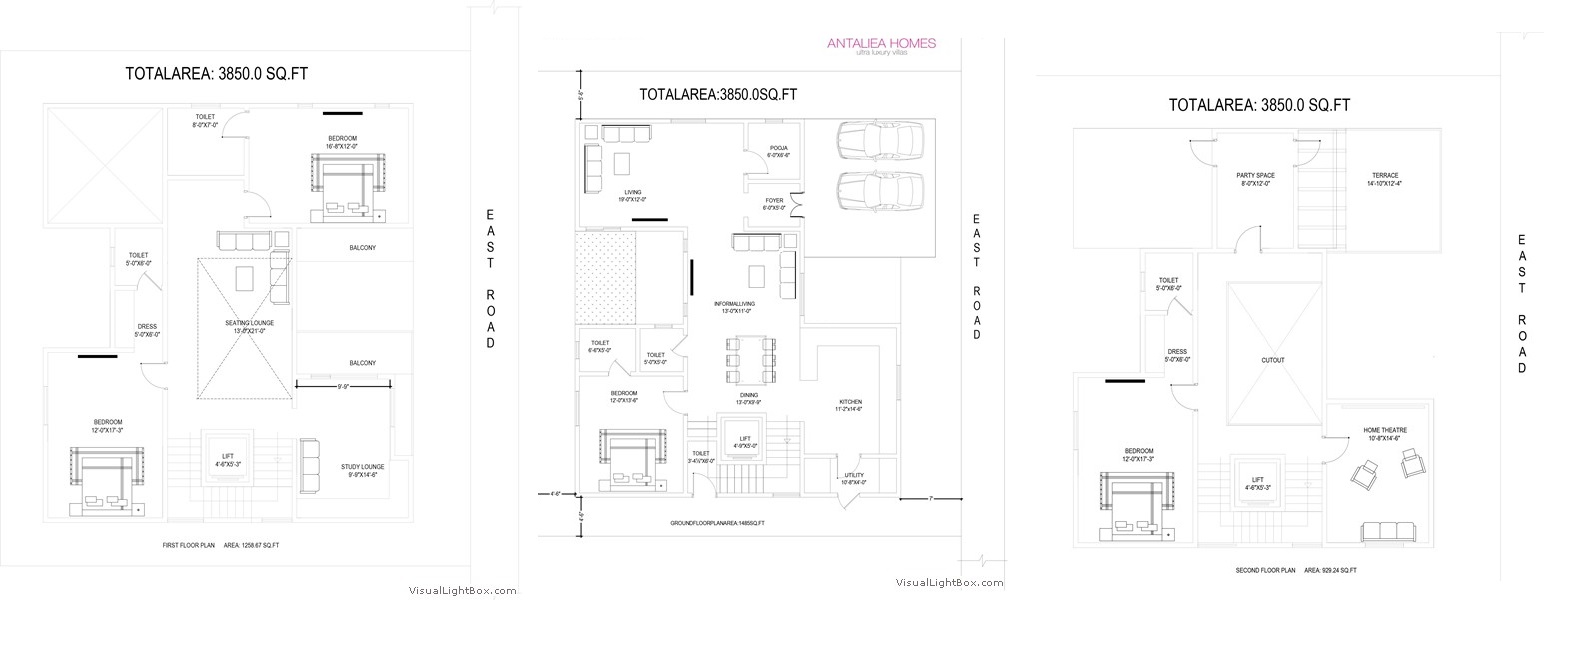 M1 Antaliea Homes Floor Plan